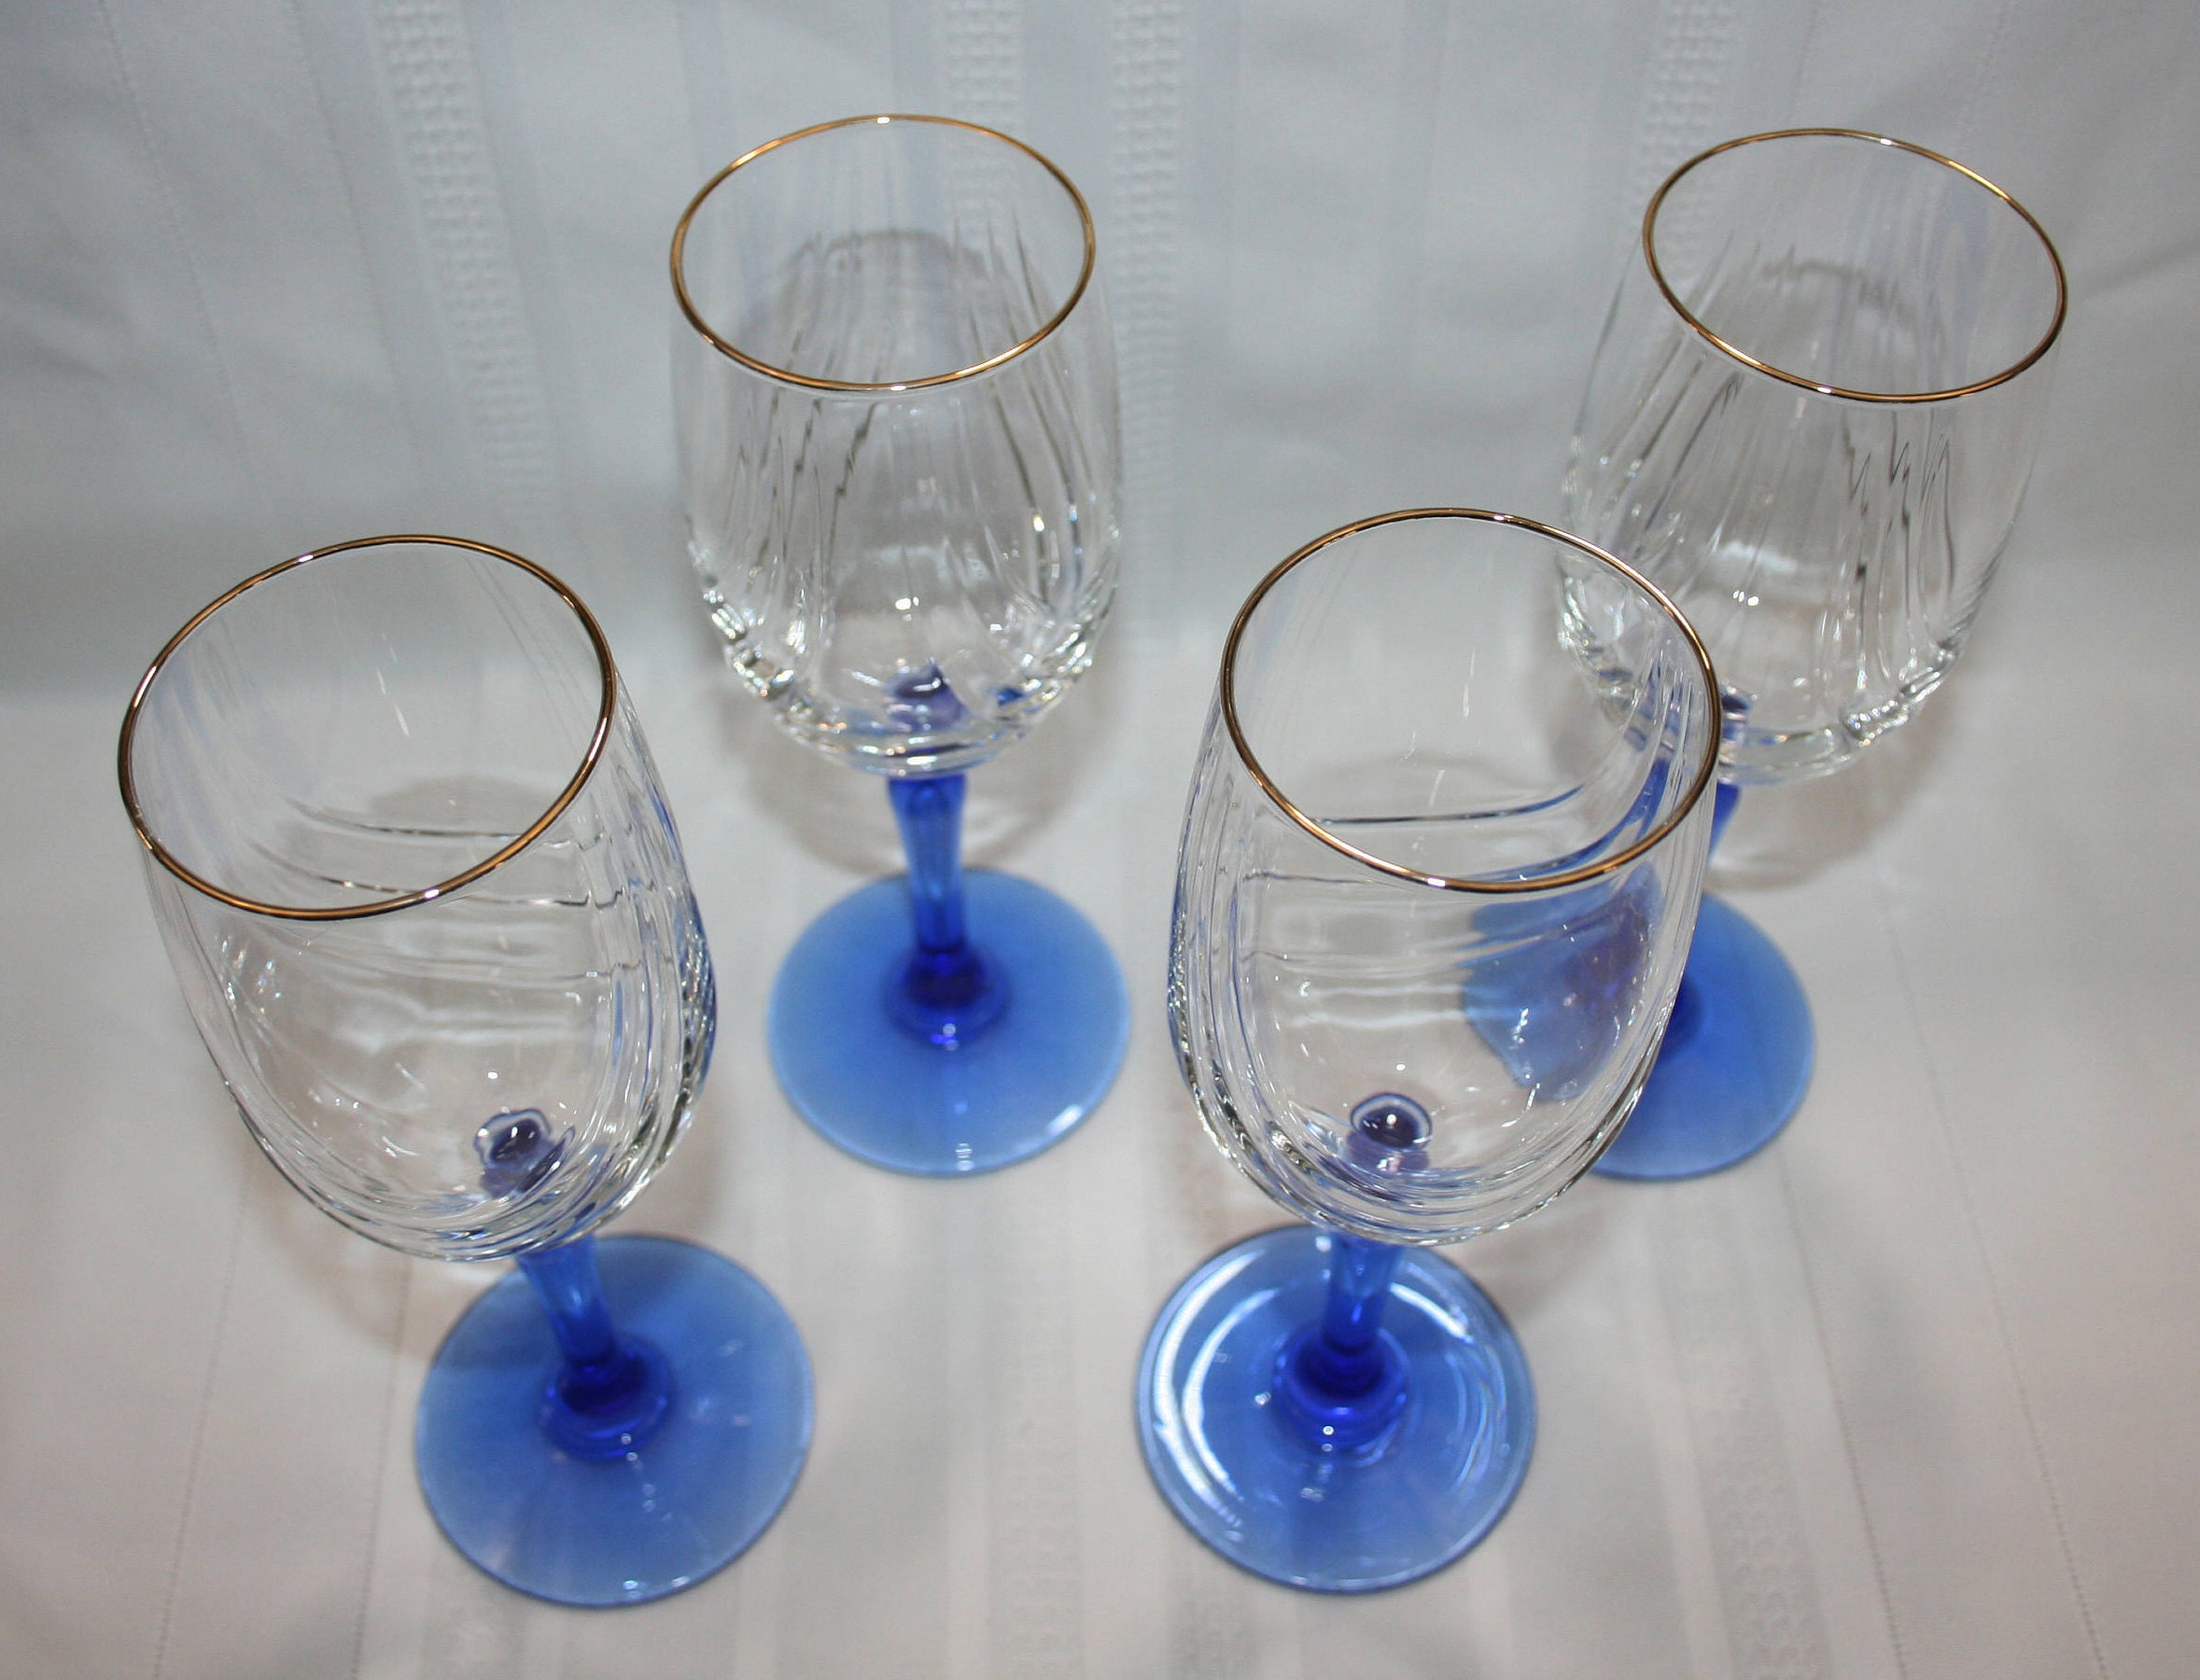 Lenox Cobalt Blue stem wine glasses, set of 4